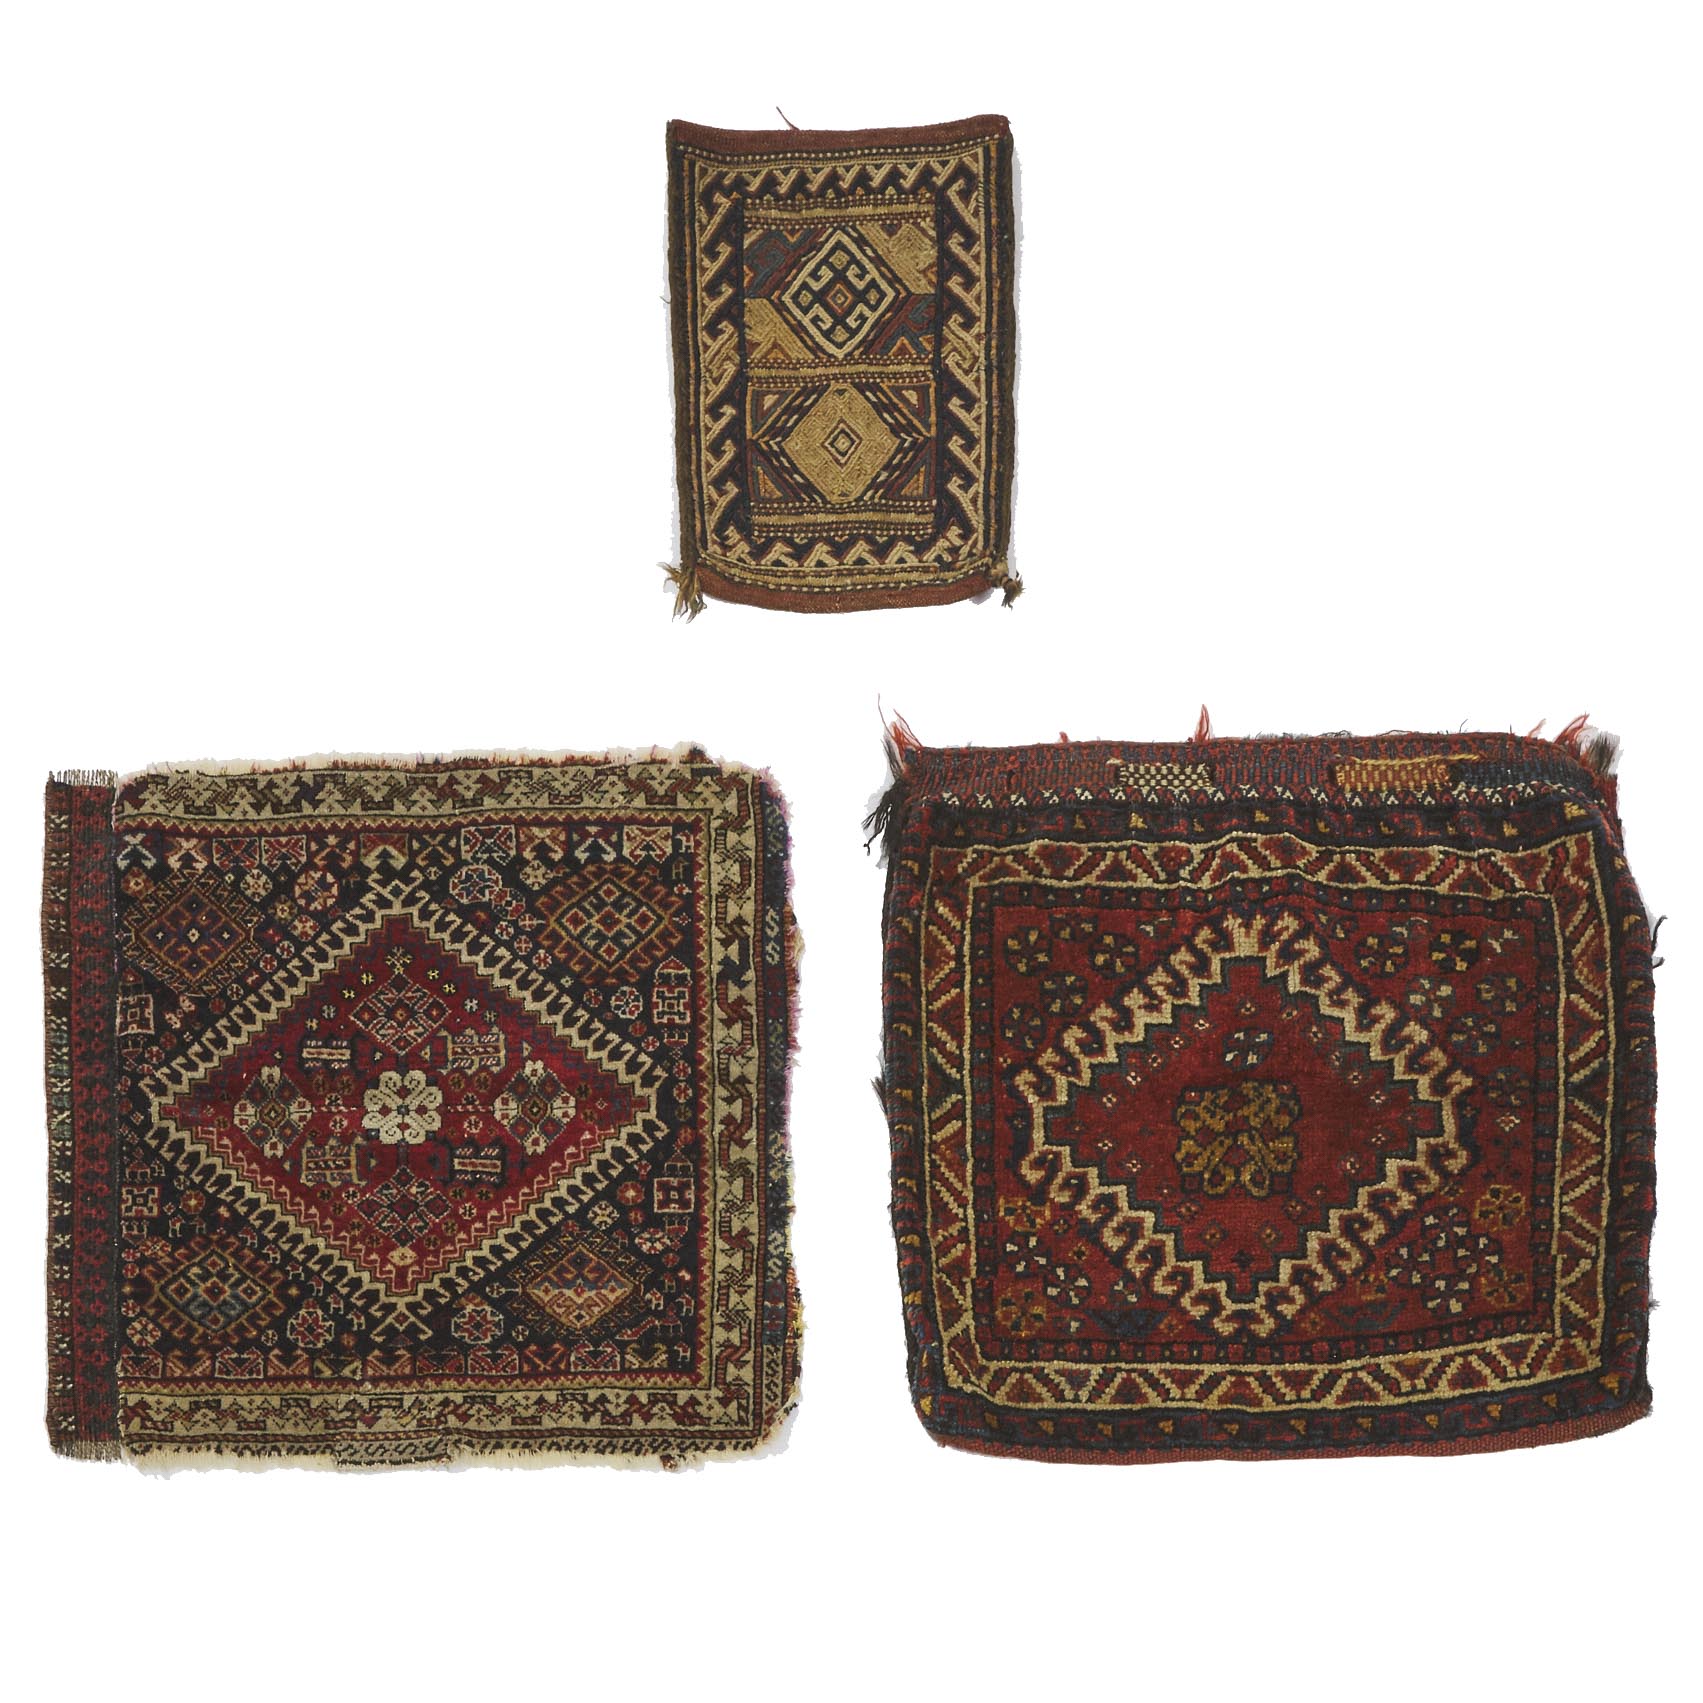 Qashqai Bag and Bag Face with silk inlets, Persian, c.1900 together with a Kurdish Salt Bag, c.1960